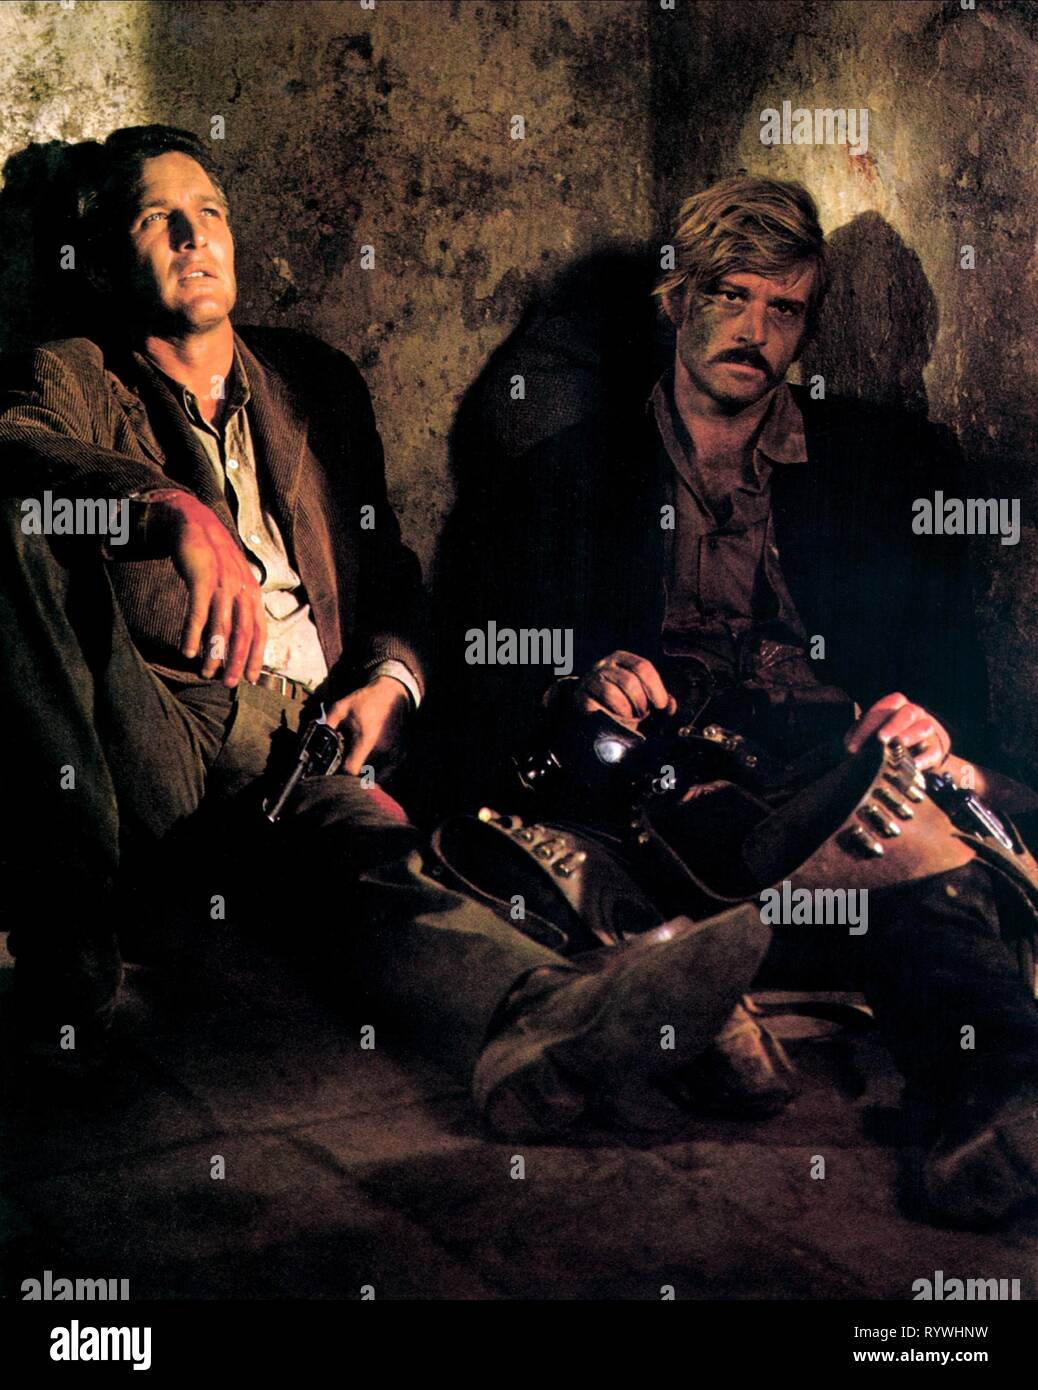 NEWMAN,REDFORD Butch Cassidy e Sundance Kid, 1969 Foto Stock